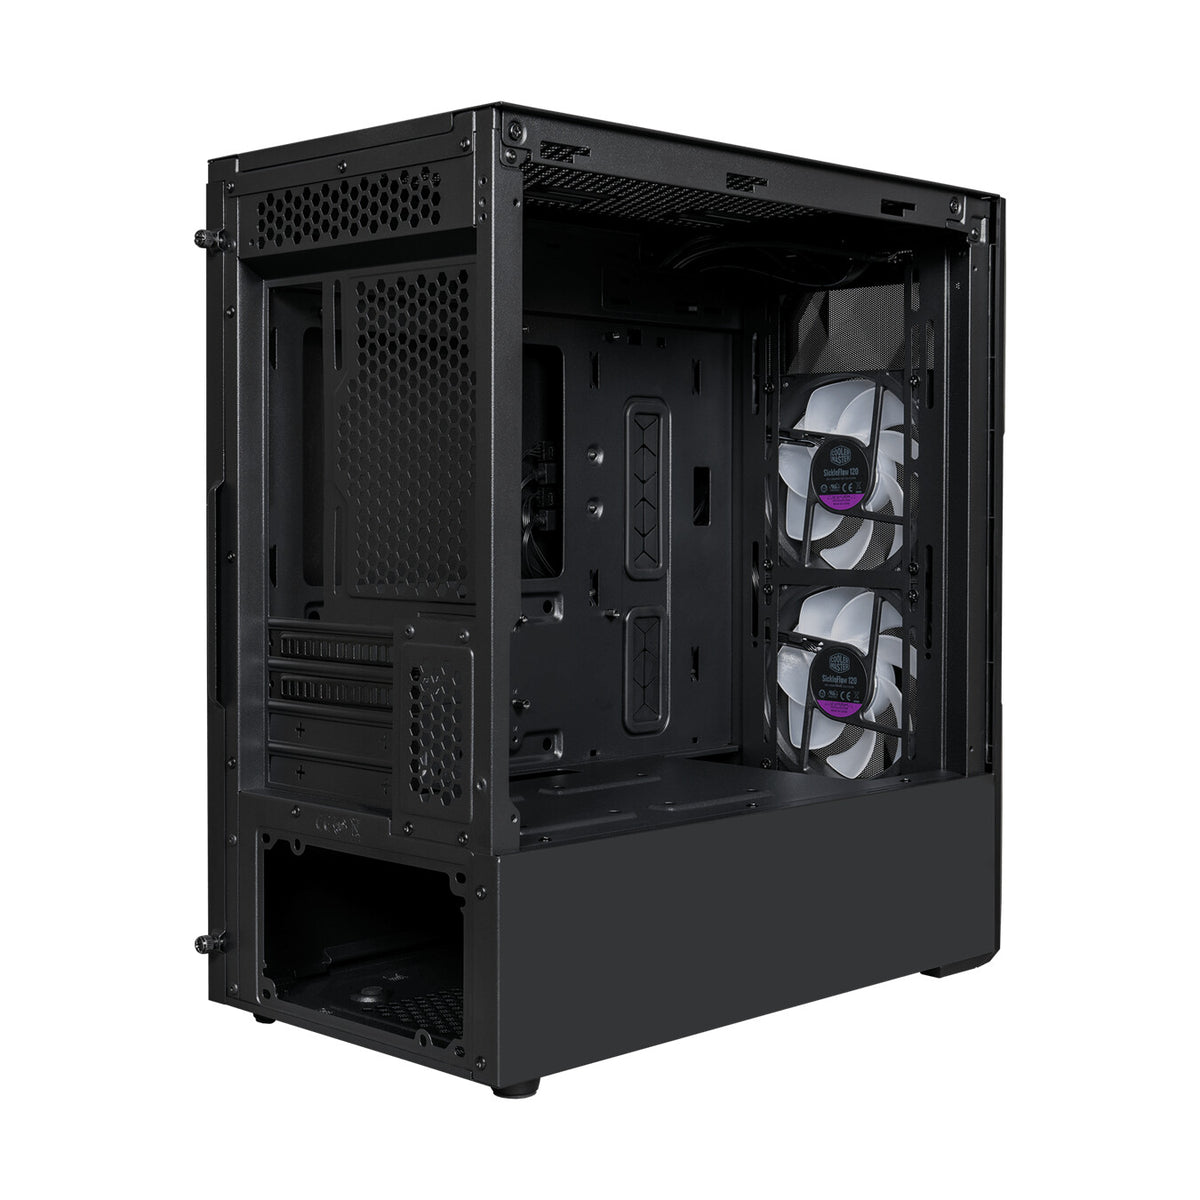 Cooler Master TD300 Mesh - MicroATX Mini Tower Case in Black